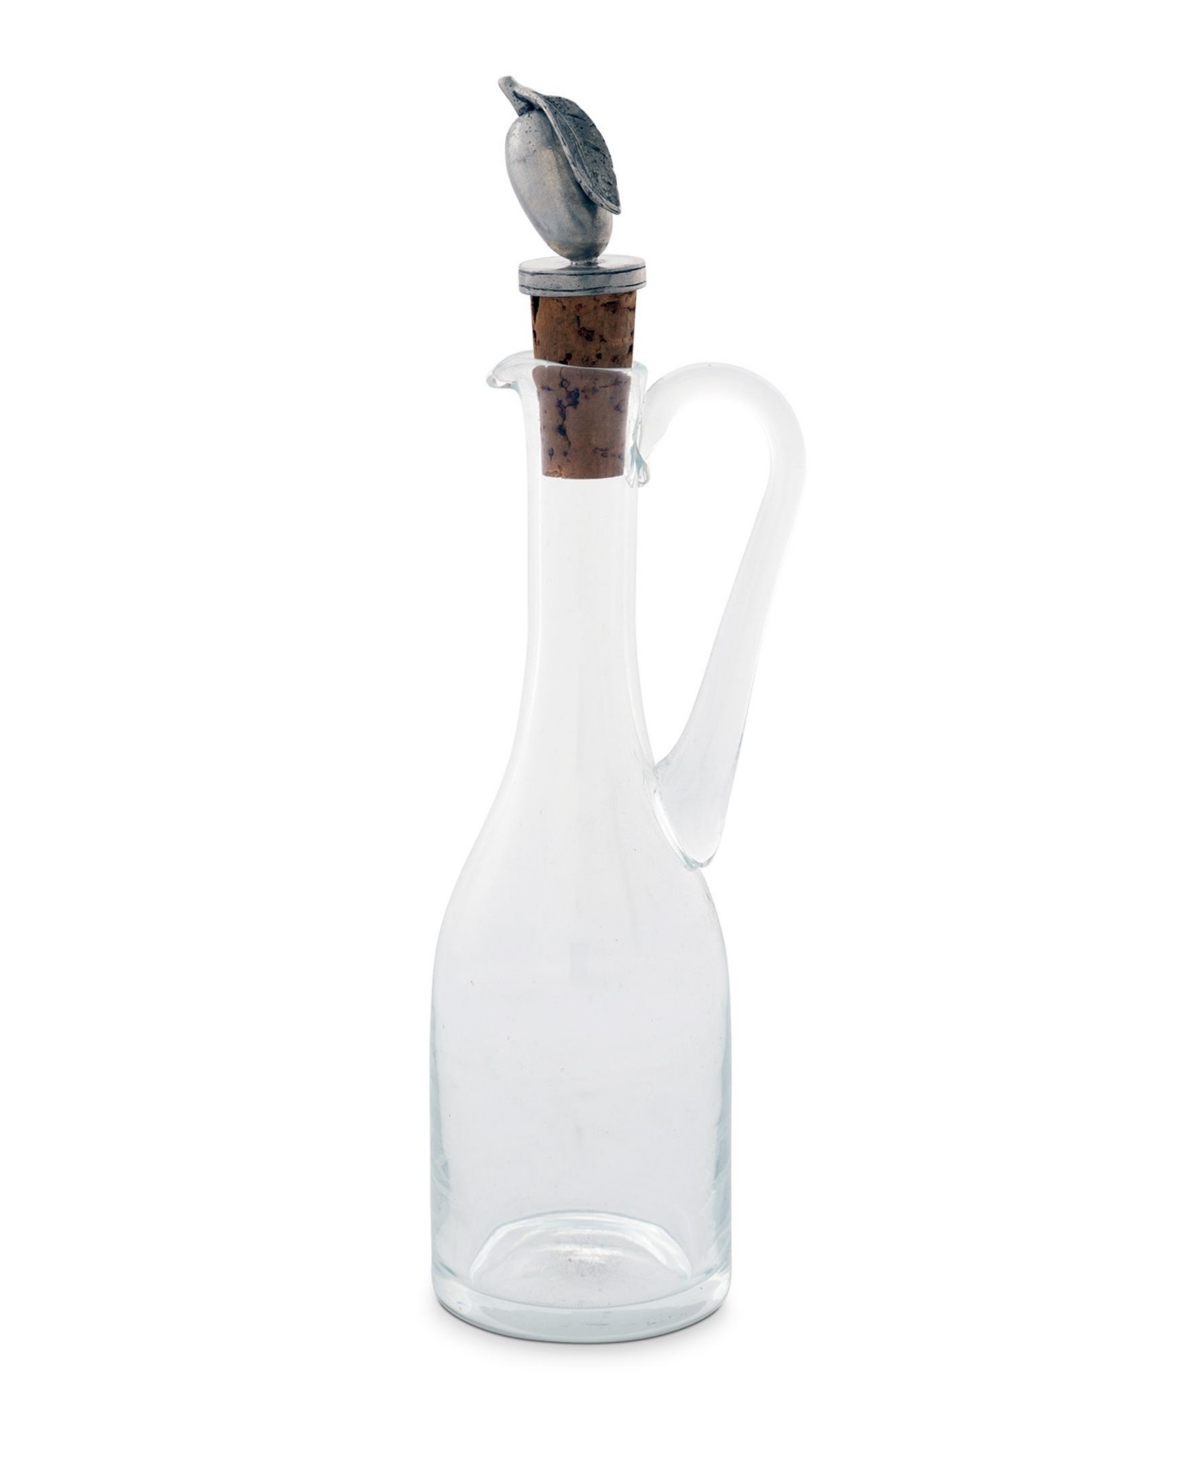 Vagabond House Hand-blown 5 oz Cruet Glass Bottle With Cork Stopper In Pewter